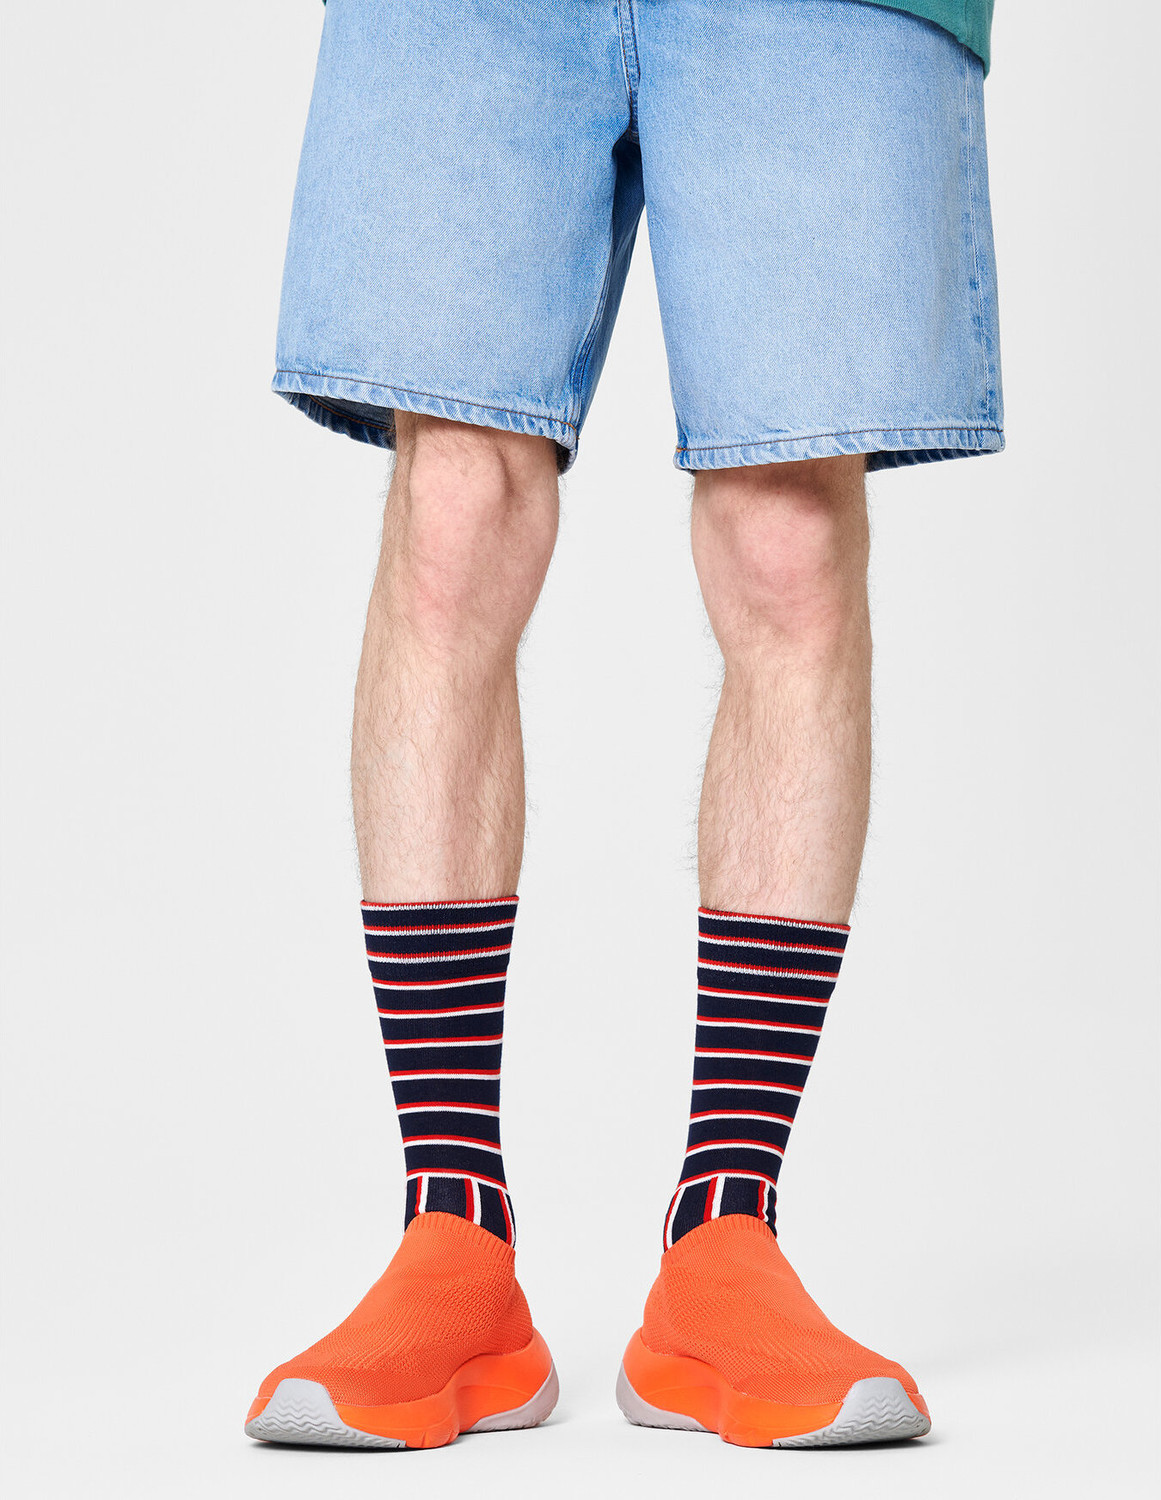 Pánské klasické ponožky Happy Socks BSS01-6500 Tmavomodrá